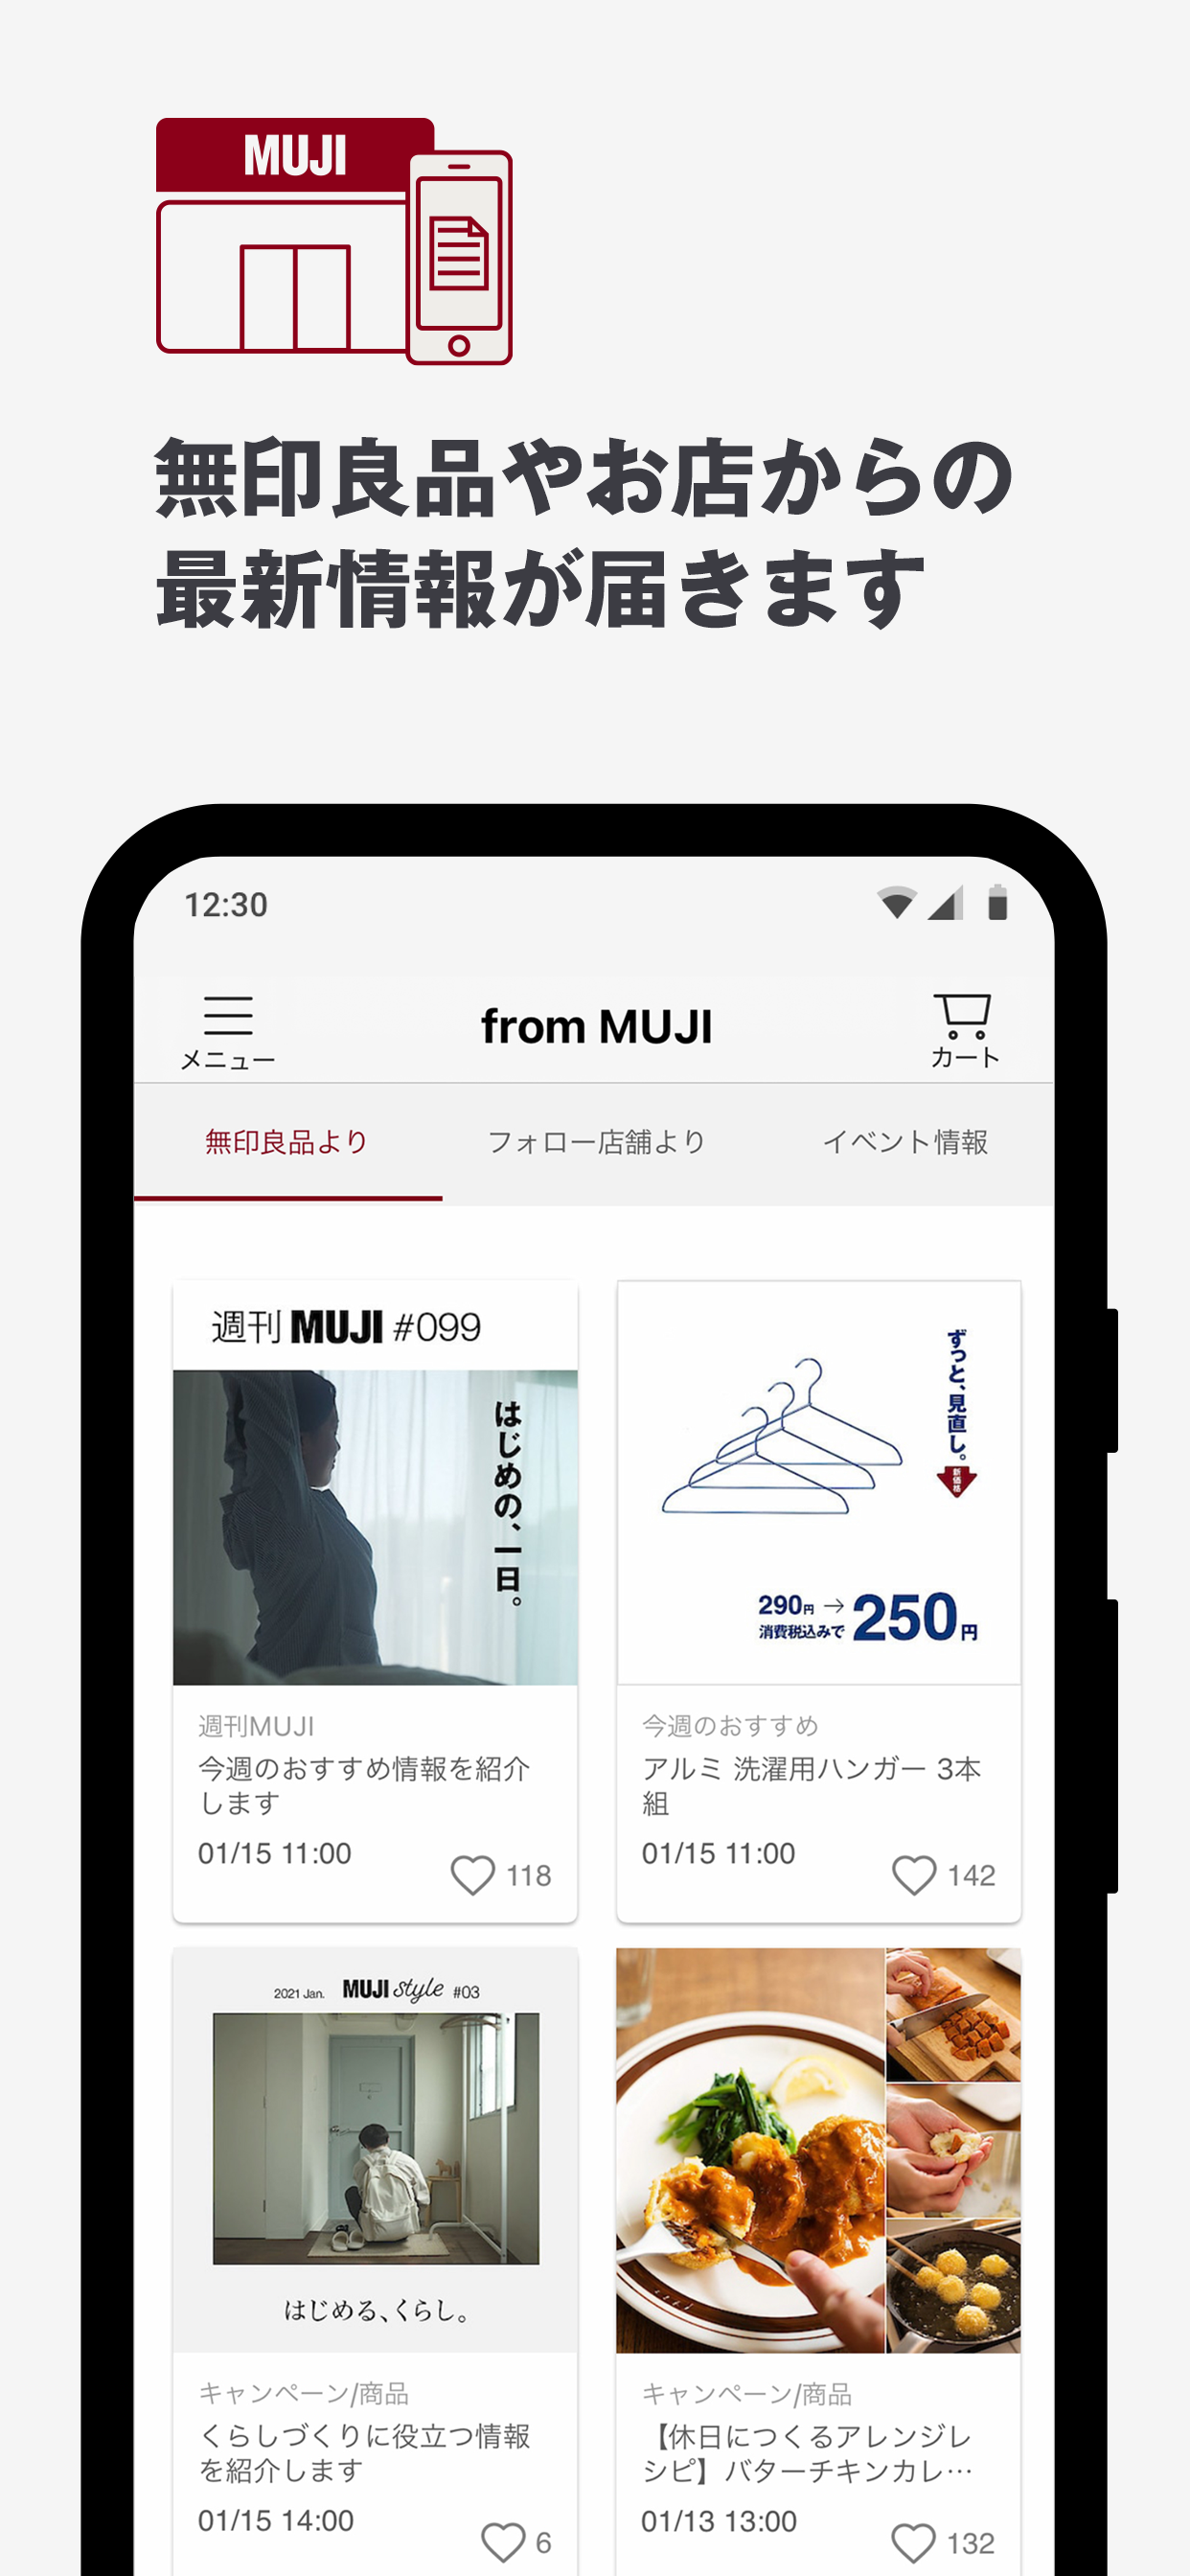 Android application MUJI passport screenshort